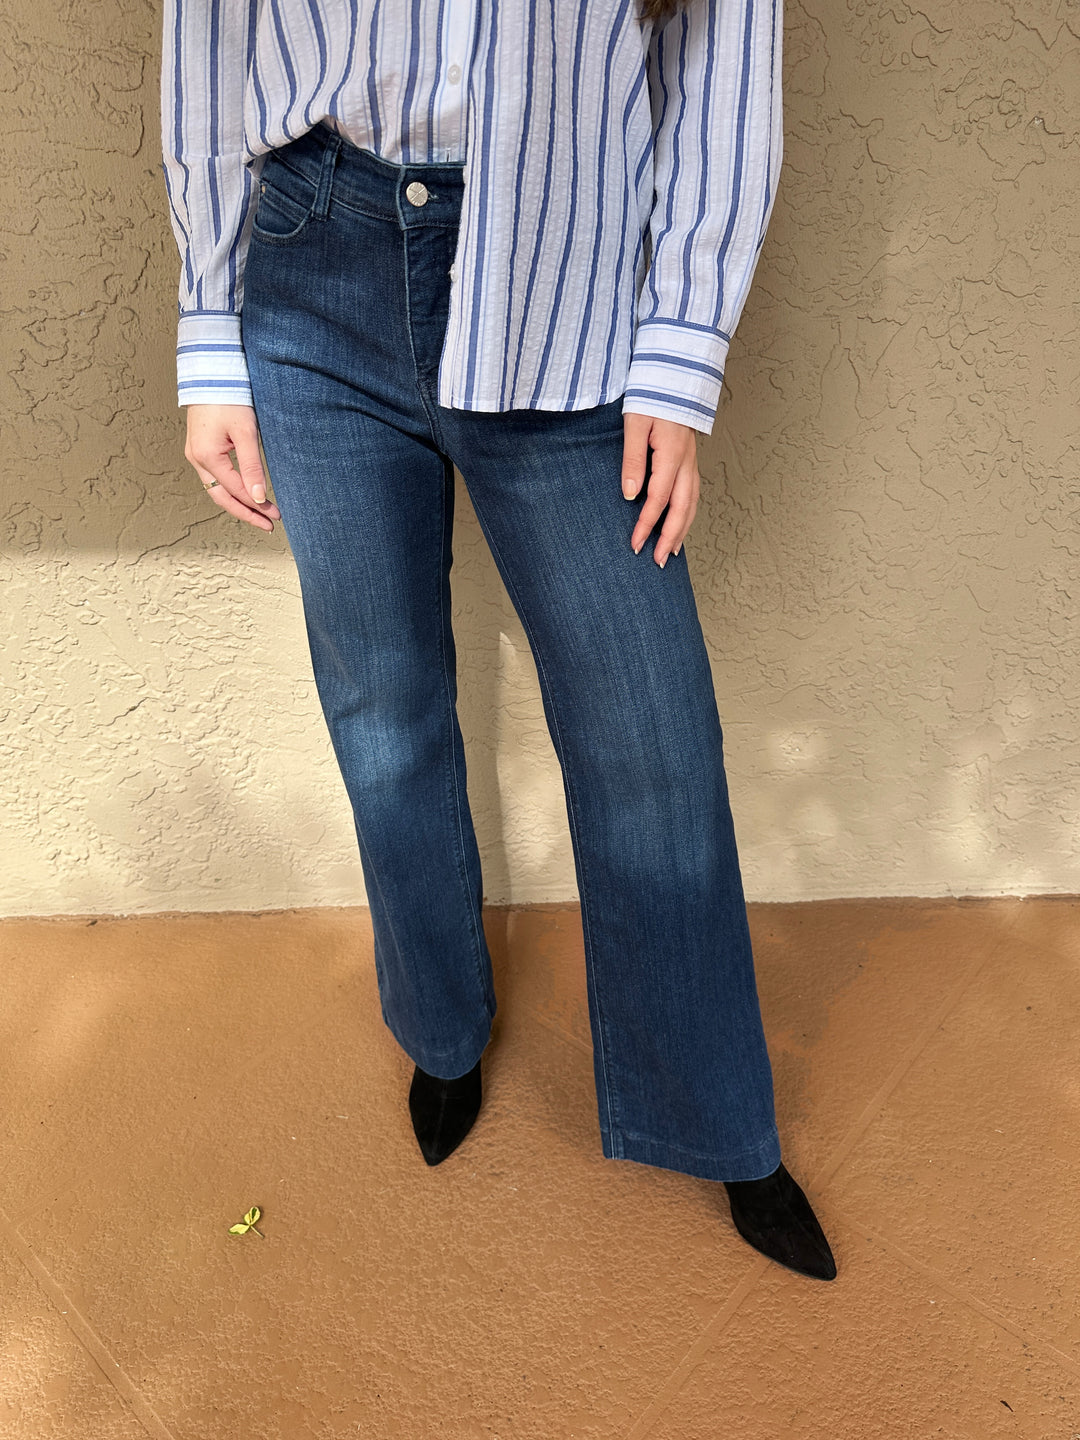 Katz Barbara MAC Collection Jeans Explore – Denim our Timeless -